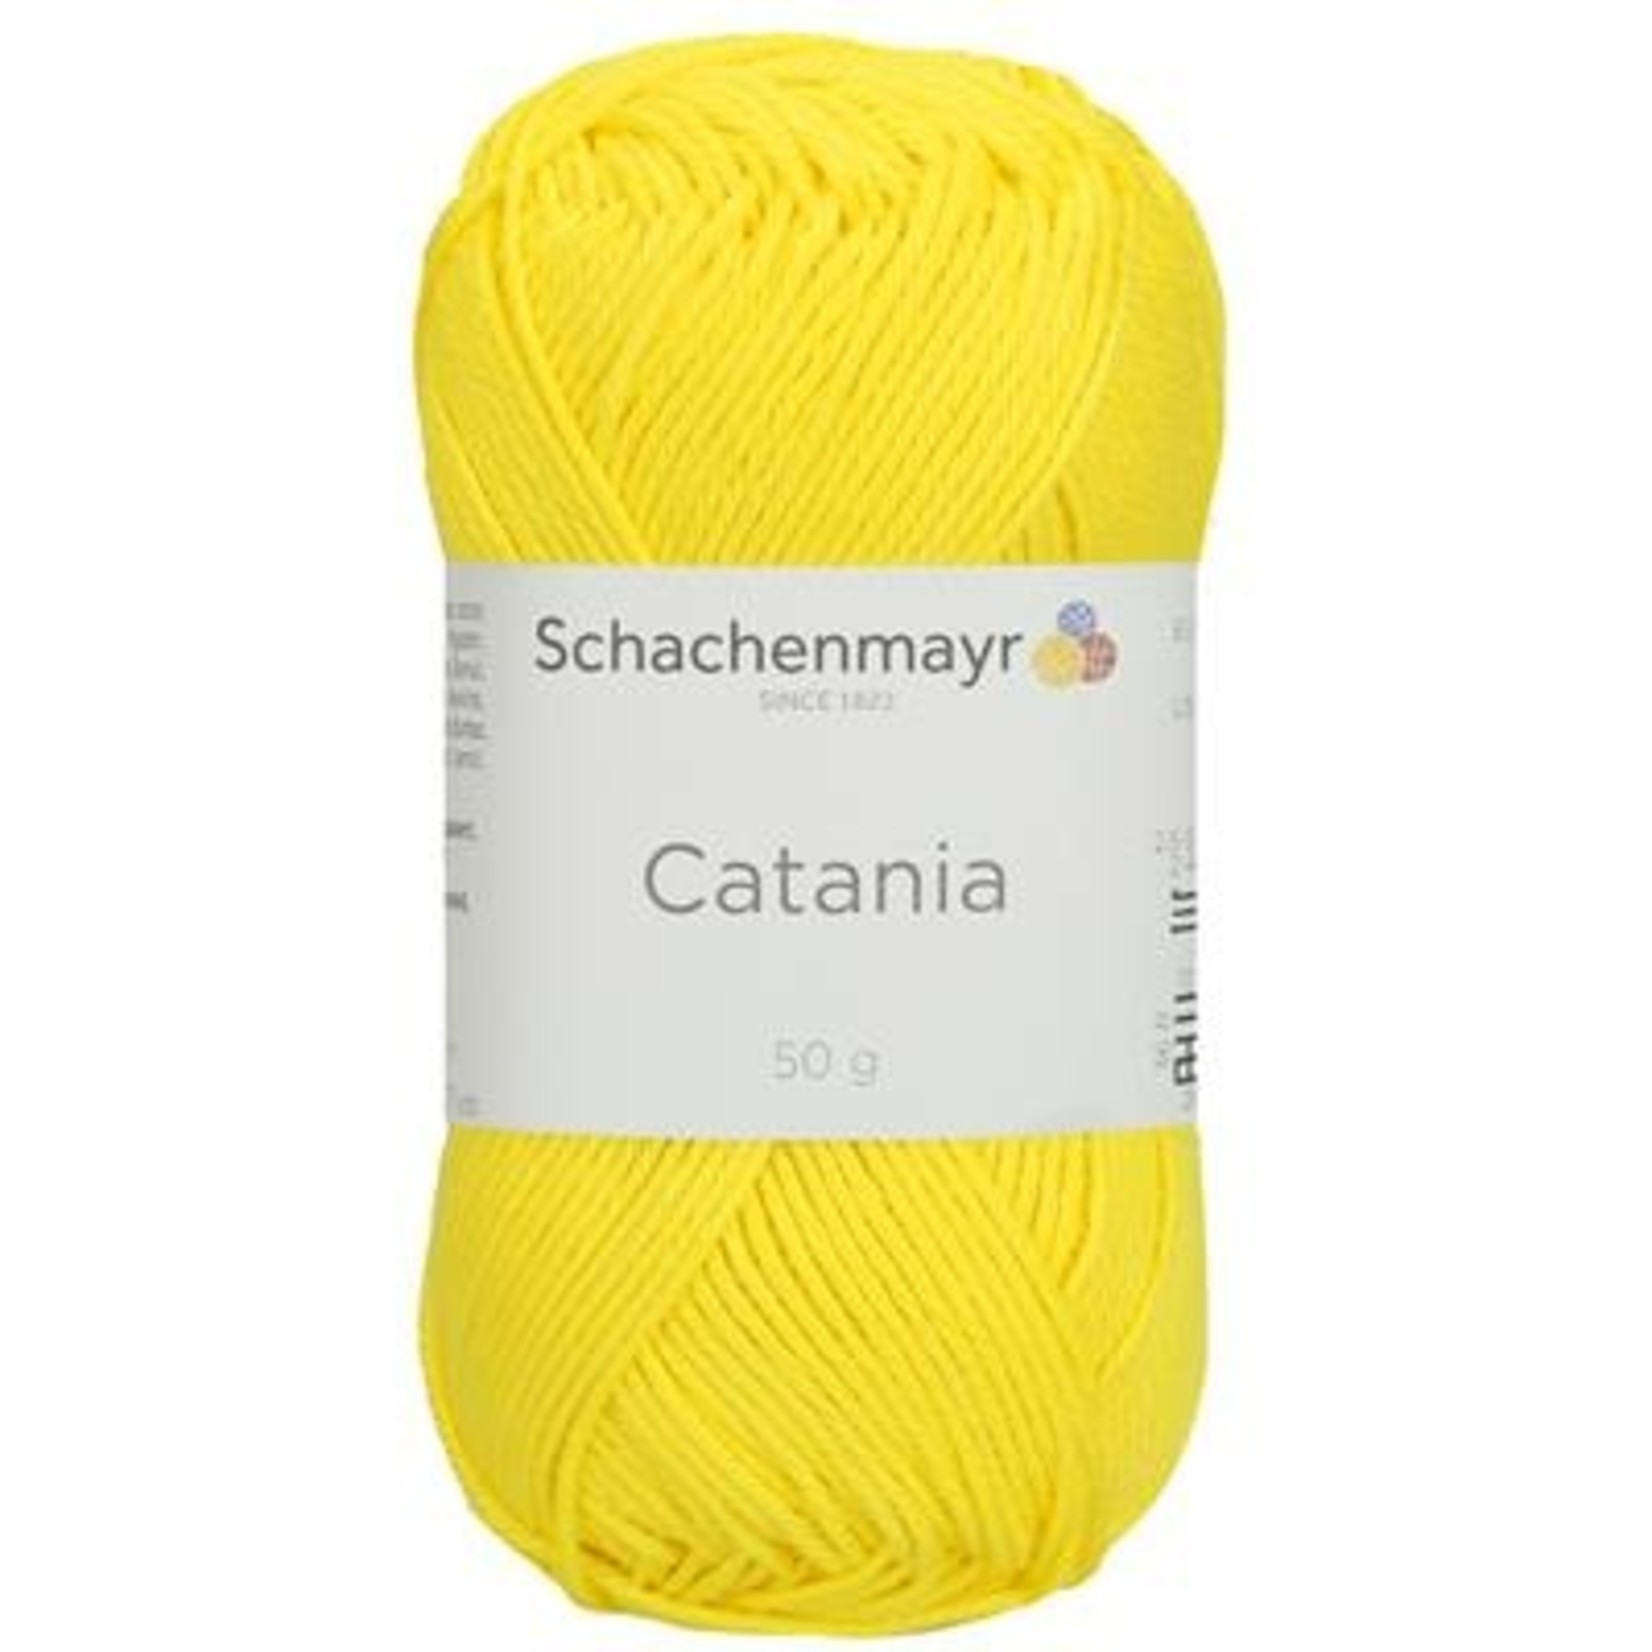 Schachenmayer Catania 442 Bright Yellow